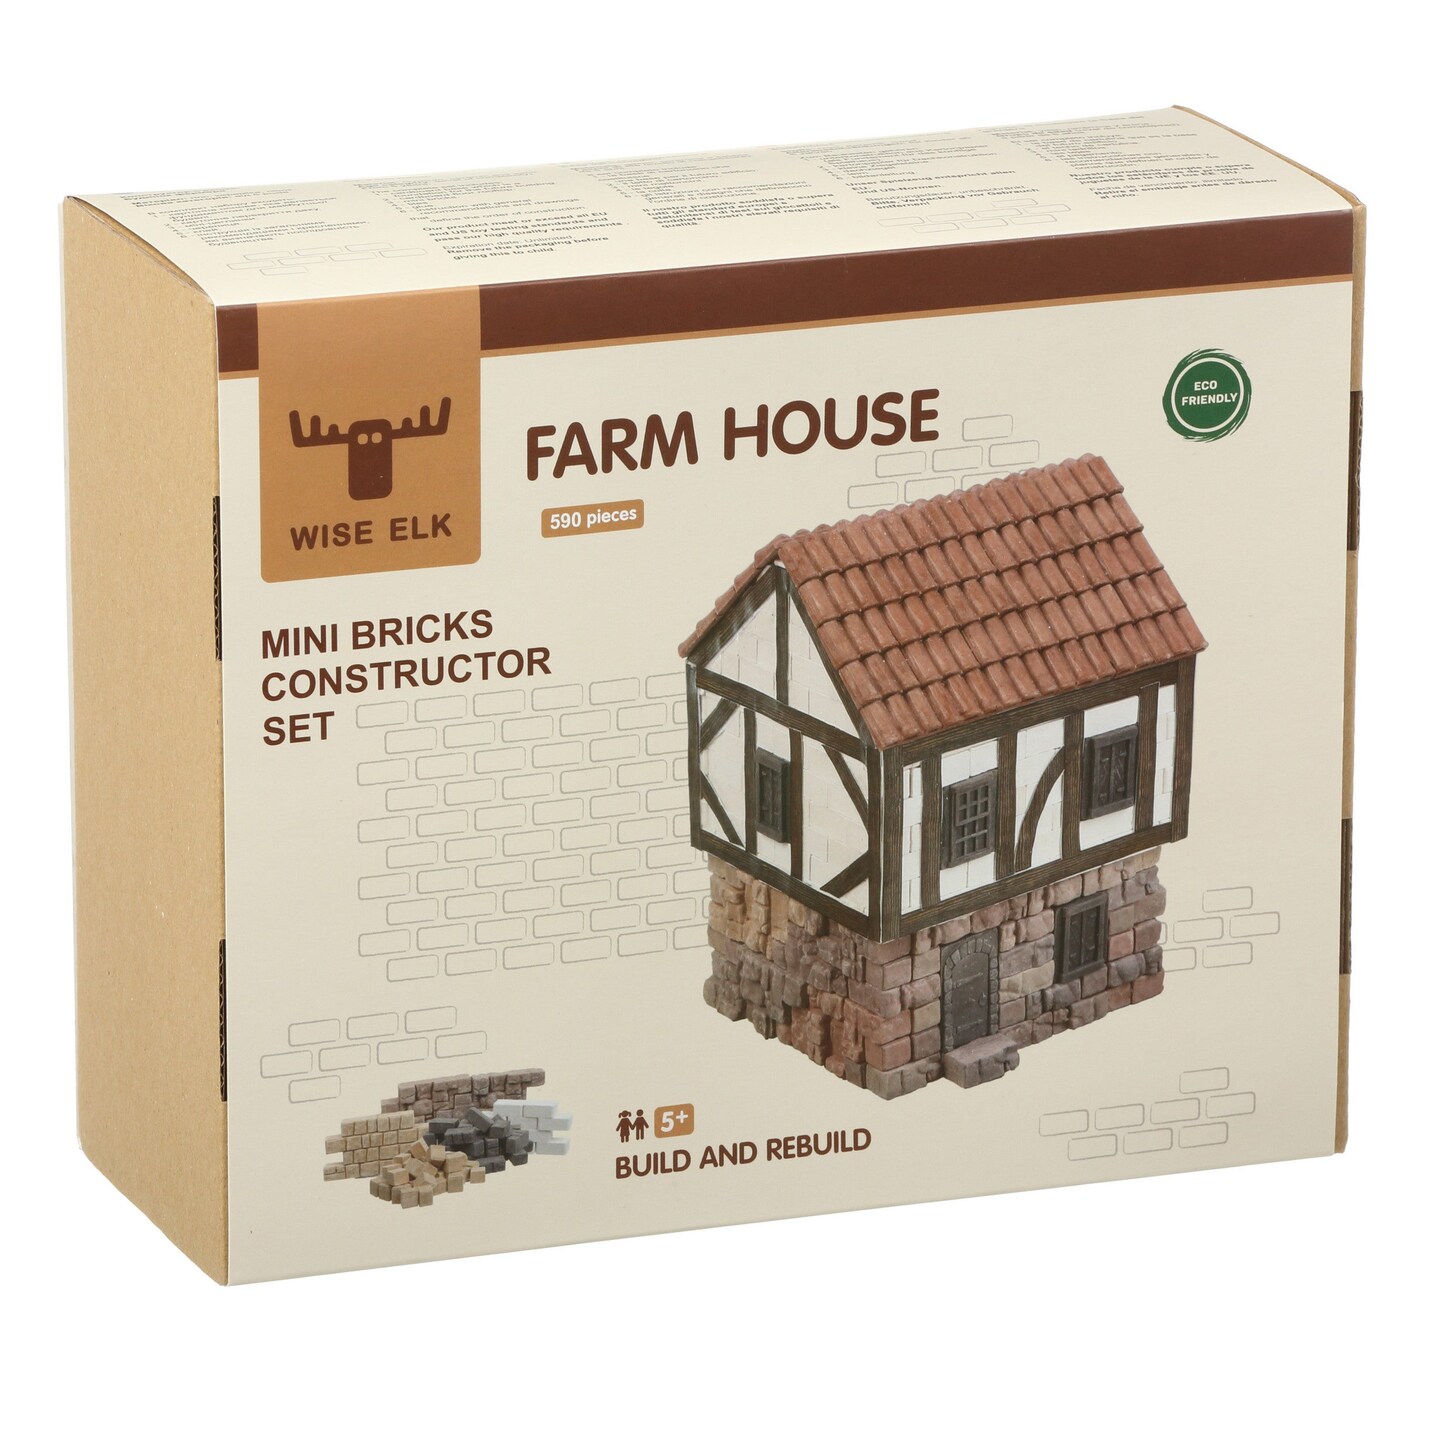 Mini bricks constructor set - Farm House